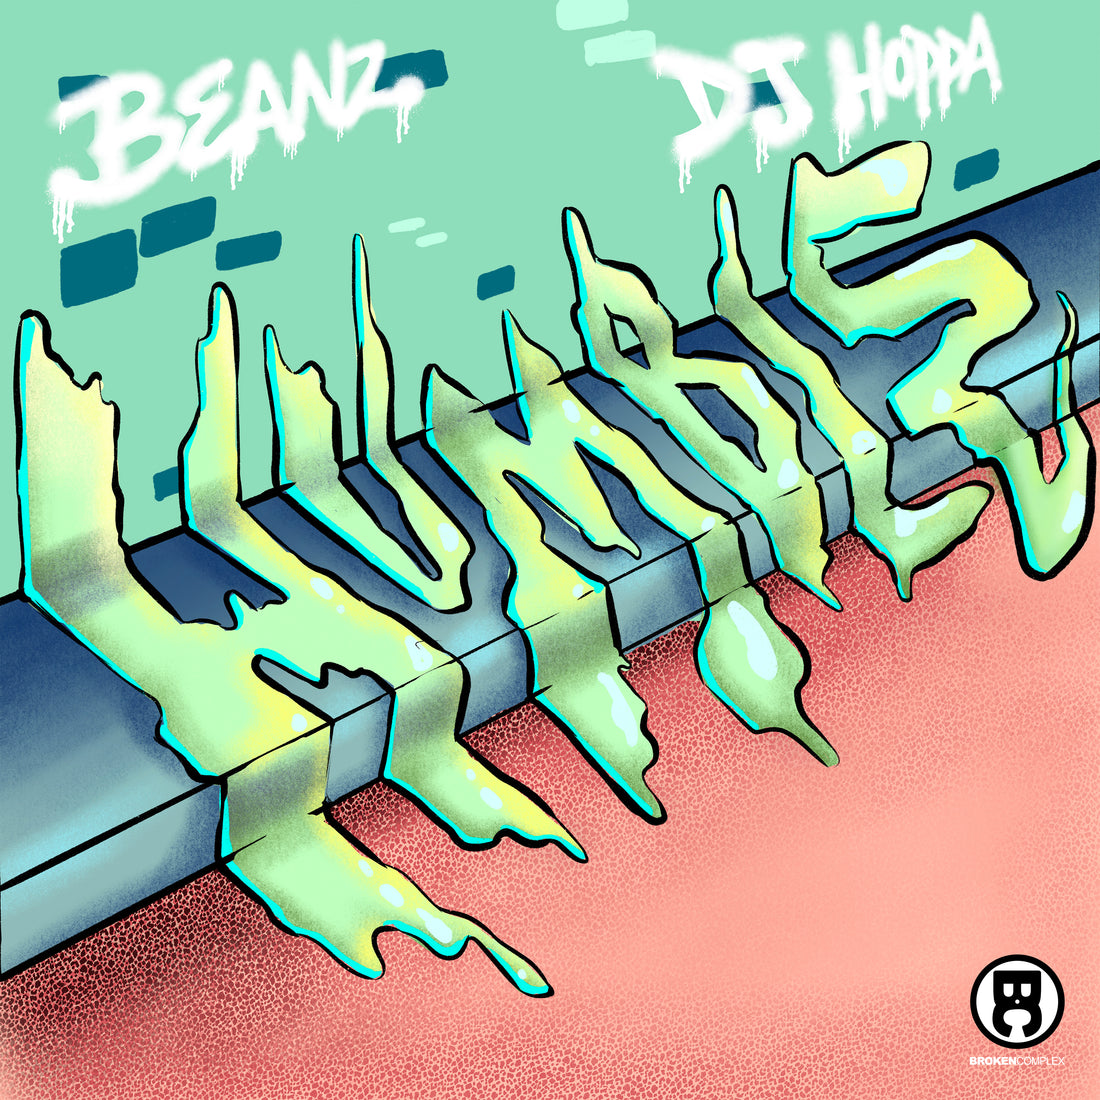 New Single: Beanz & DJ Hoppa - "Humble"